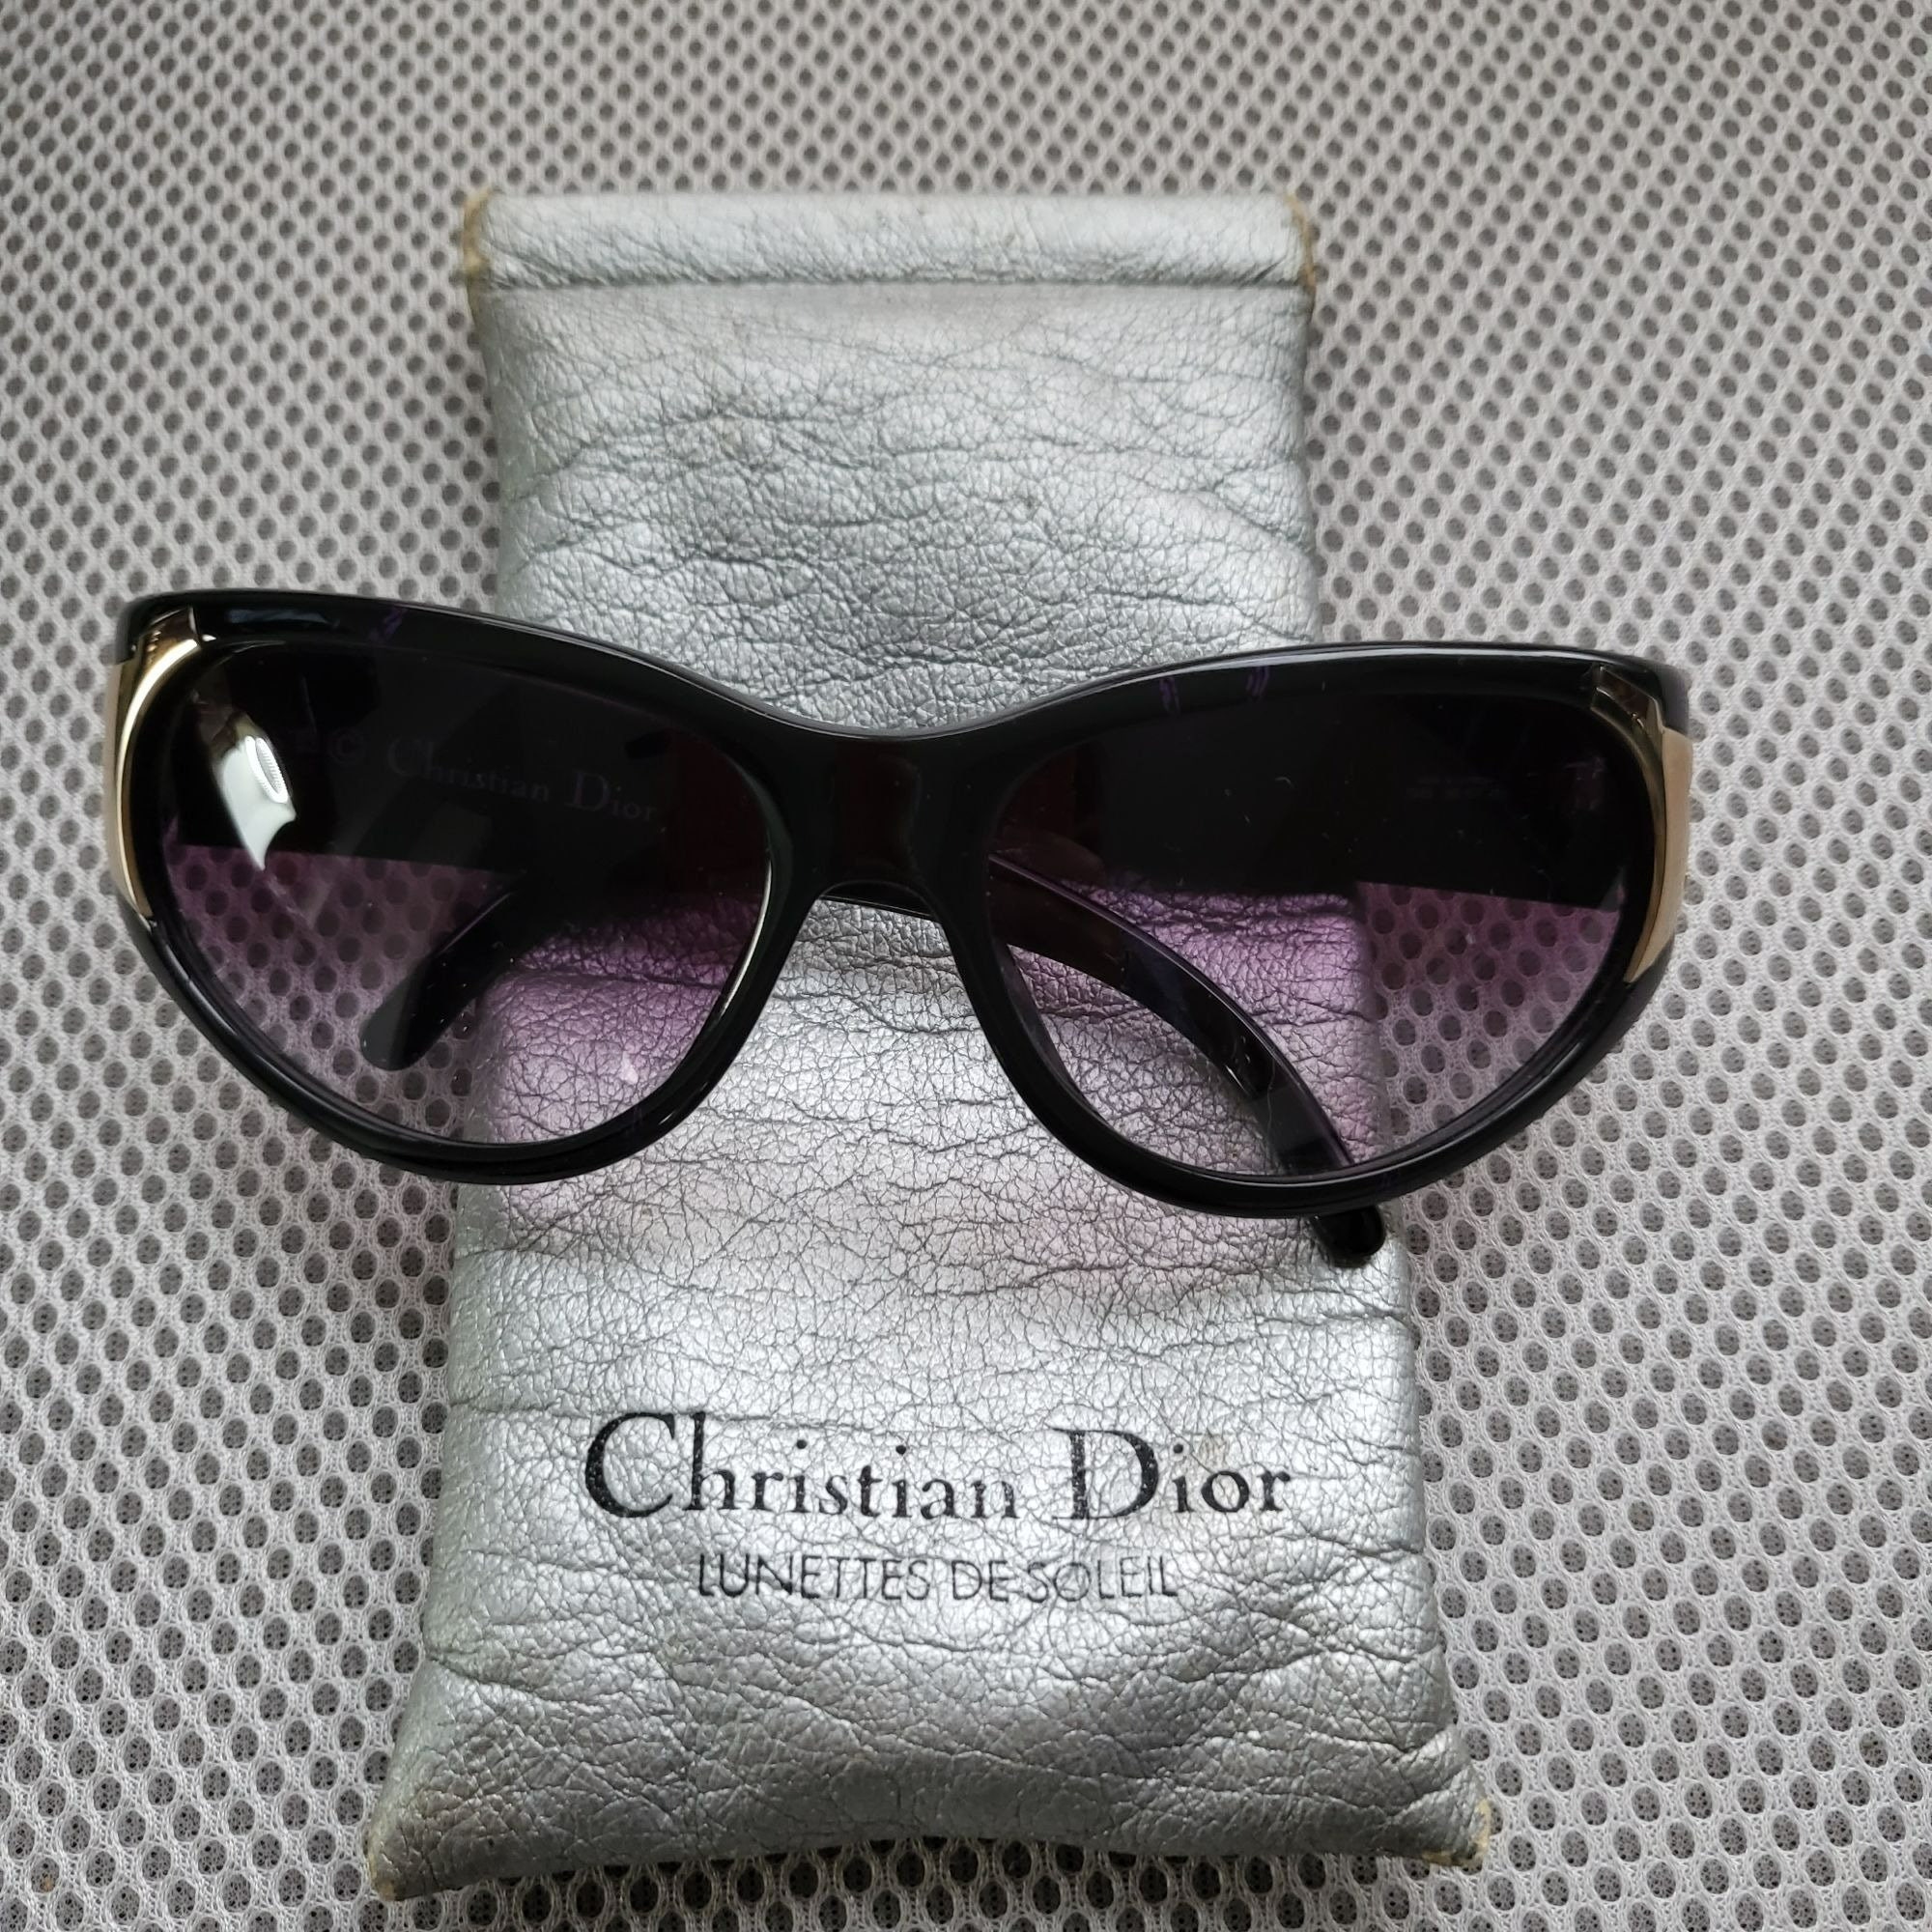 Christian Dior Vintage 80s Germany 2346 Optyl Sunglasses Oversize 90 62 16 Black